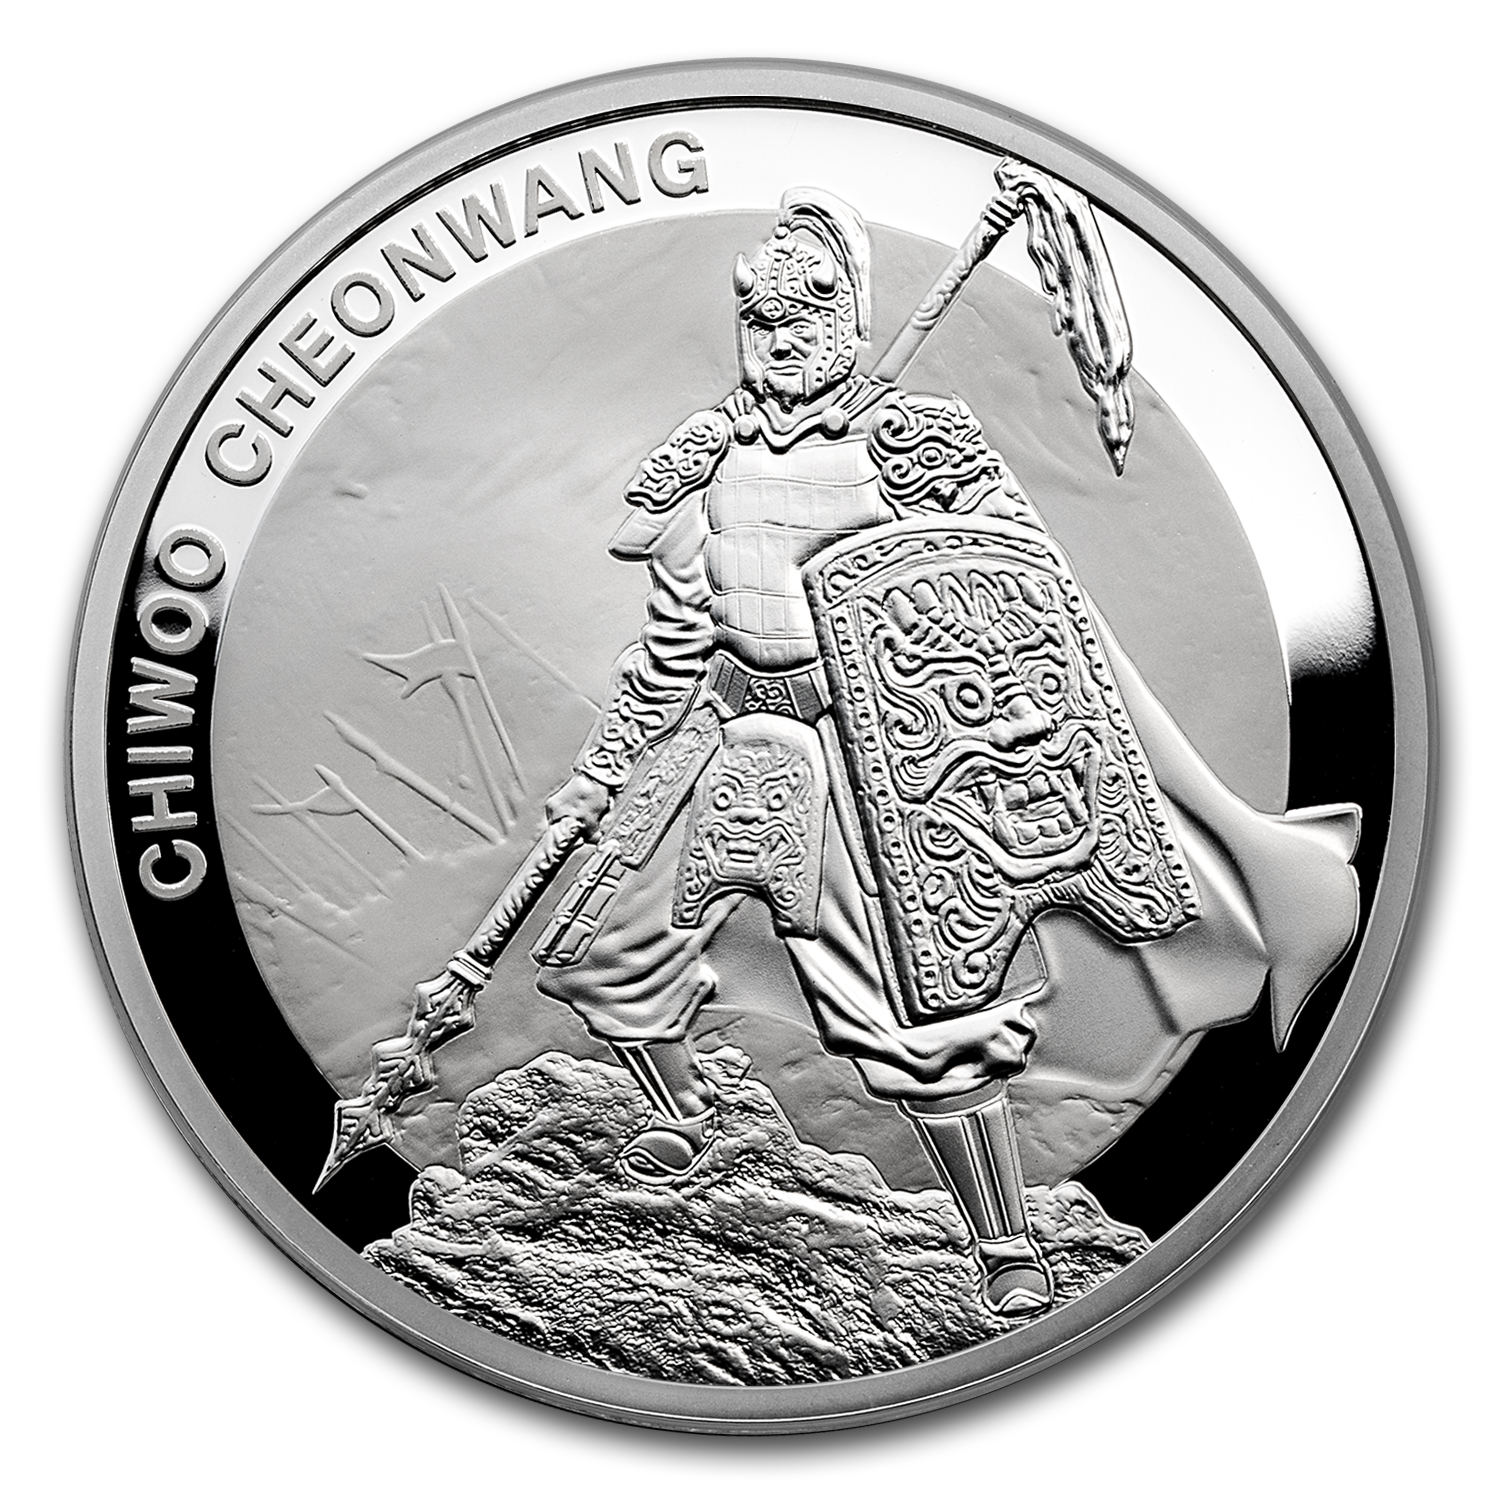 Buy 2016 South Korea 1 oz Silver 1 Clay Chiwoo Cheonwang Proof